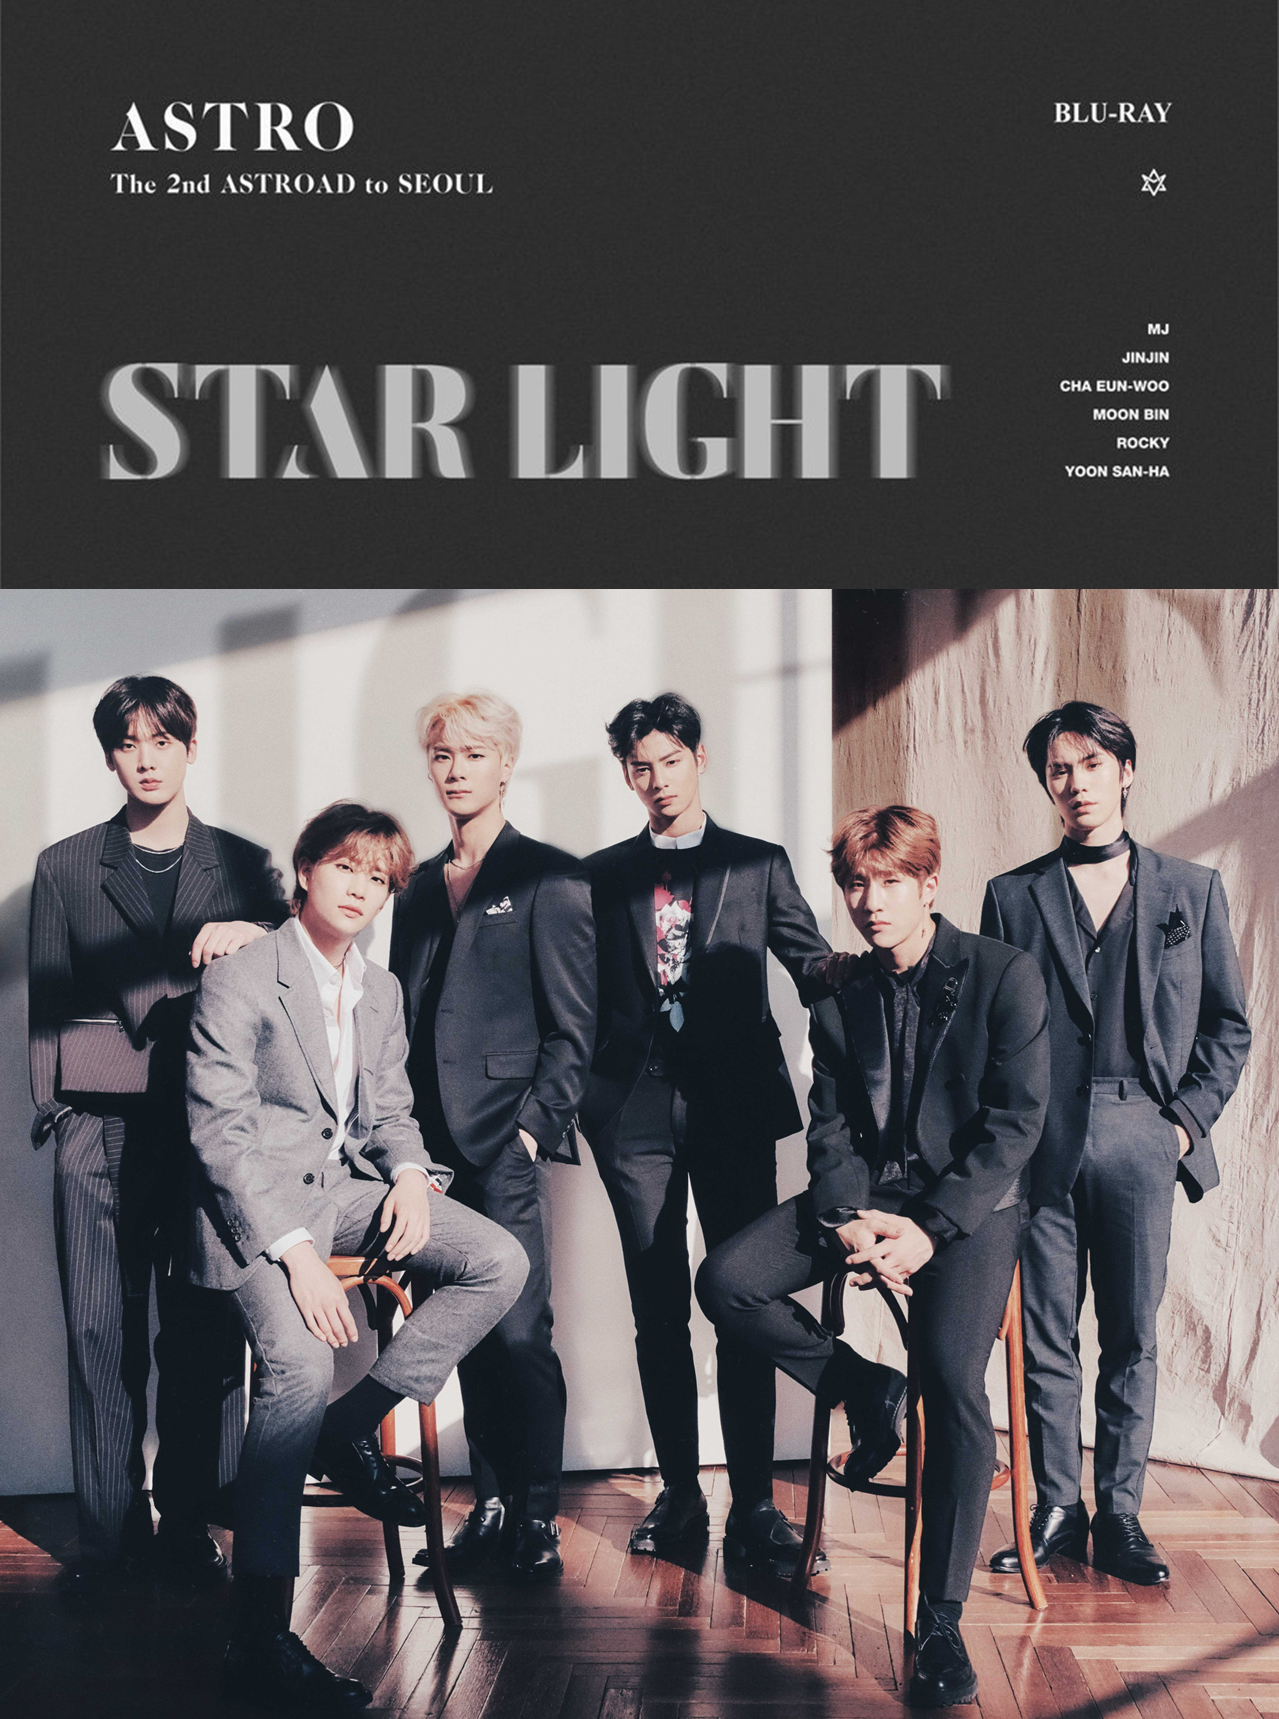 BLU-RAY - ASTRO - The 2nd ASTROAD to SEOUL [STAR LIGHT] BLURAY |  ShareMania.US